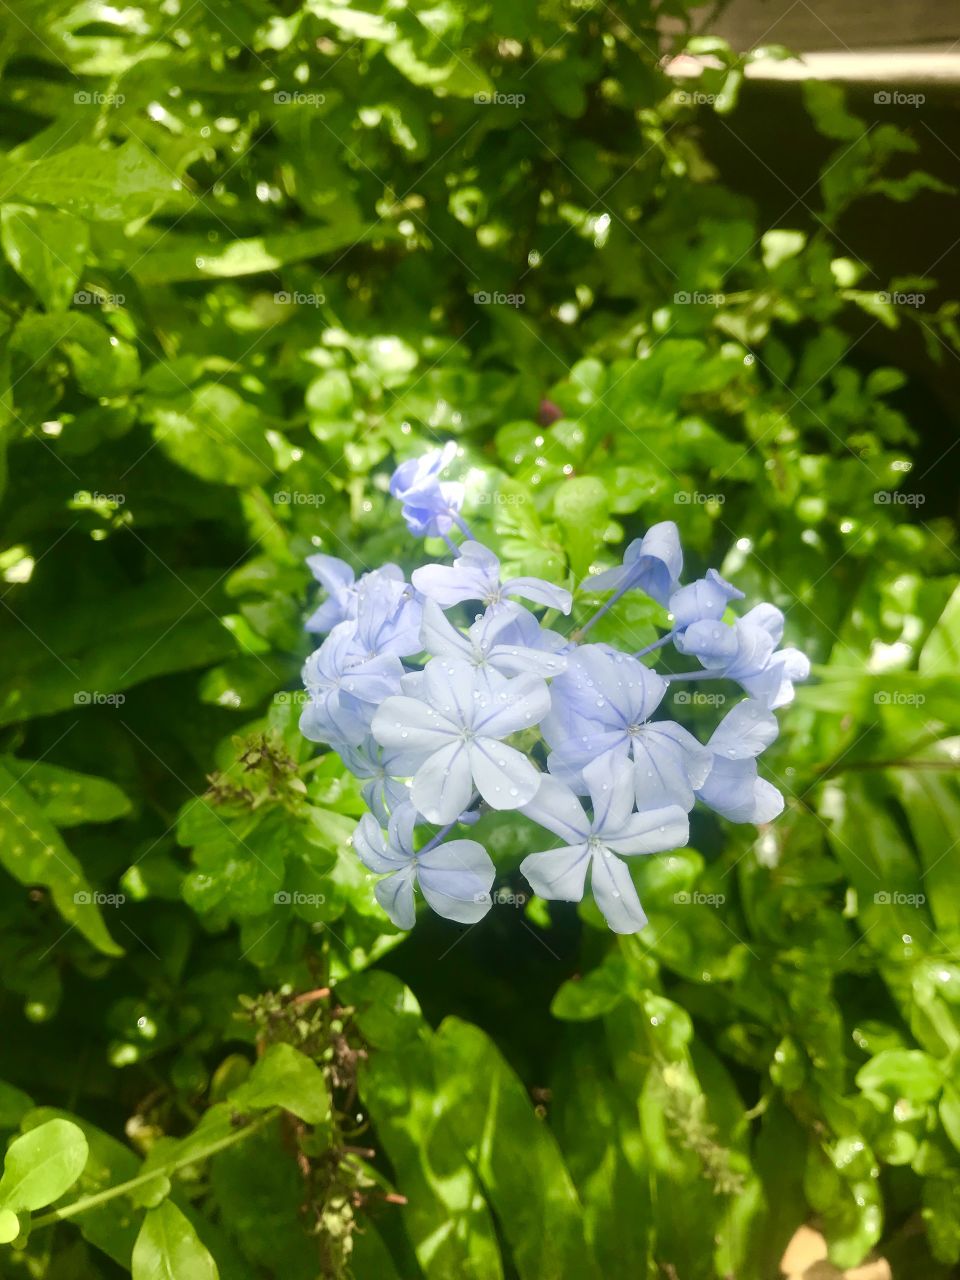 Raindrops on blue flowers